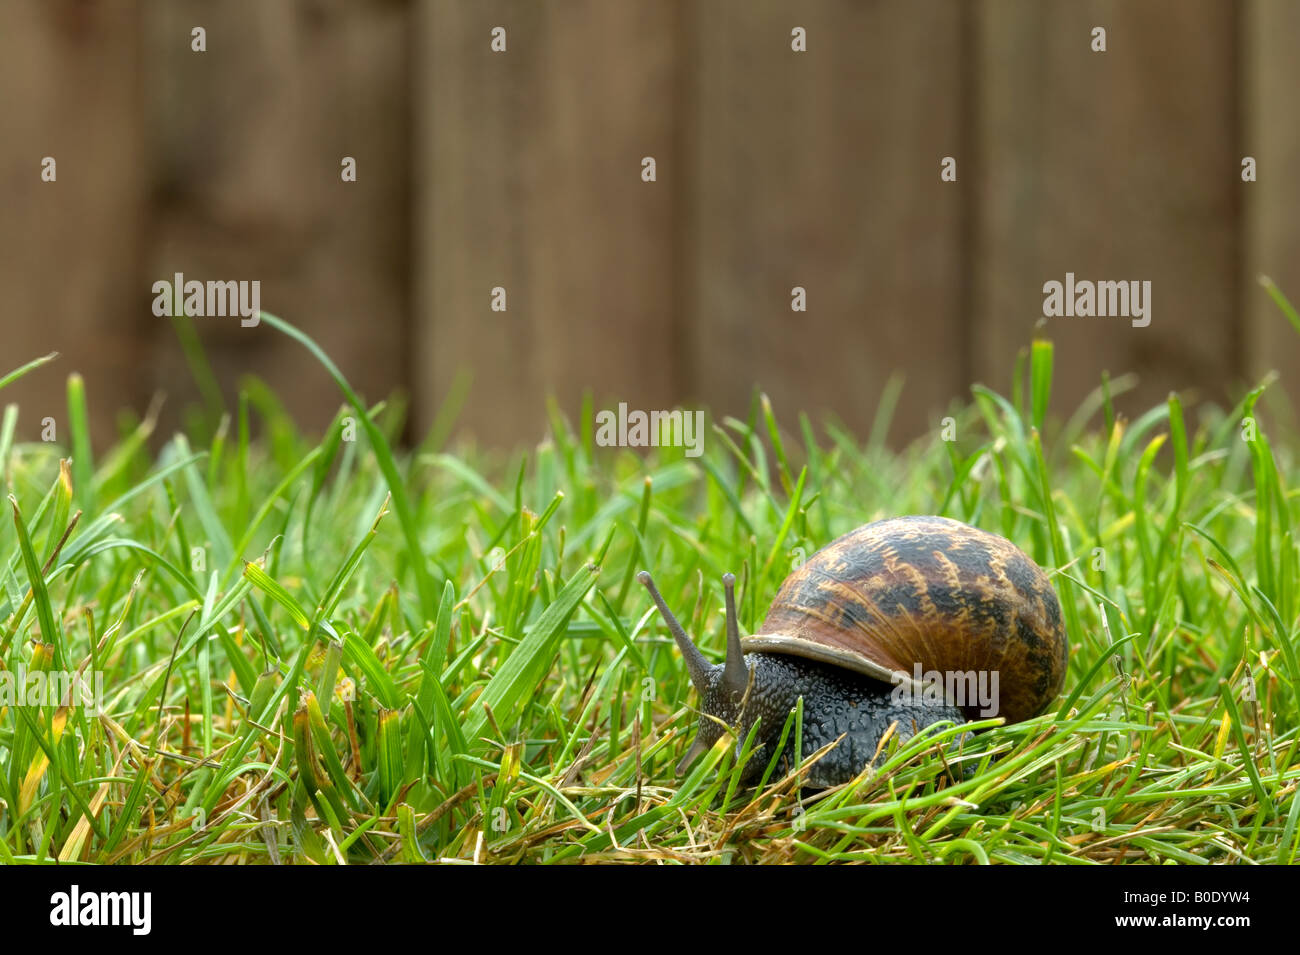 A garden snail as it moves across the lawn Stock Photo